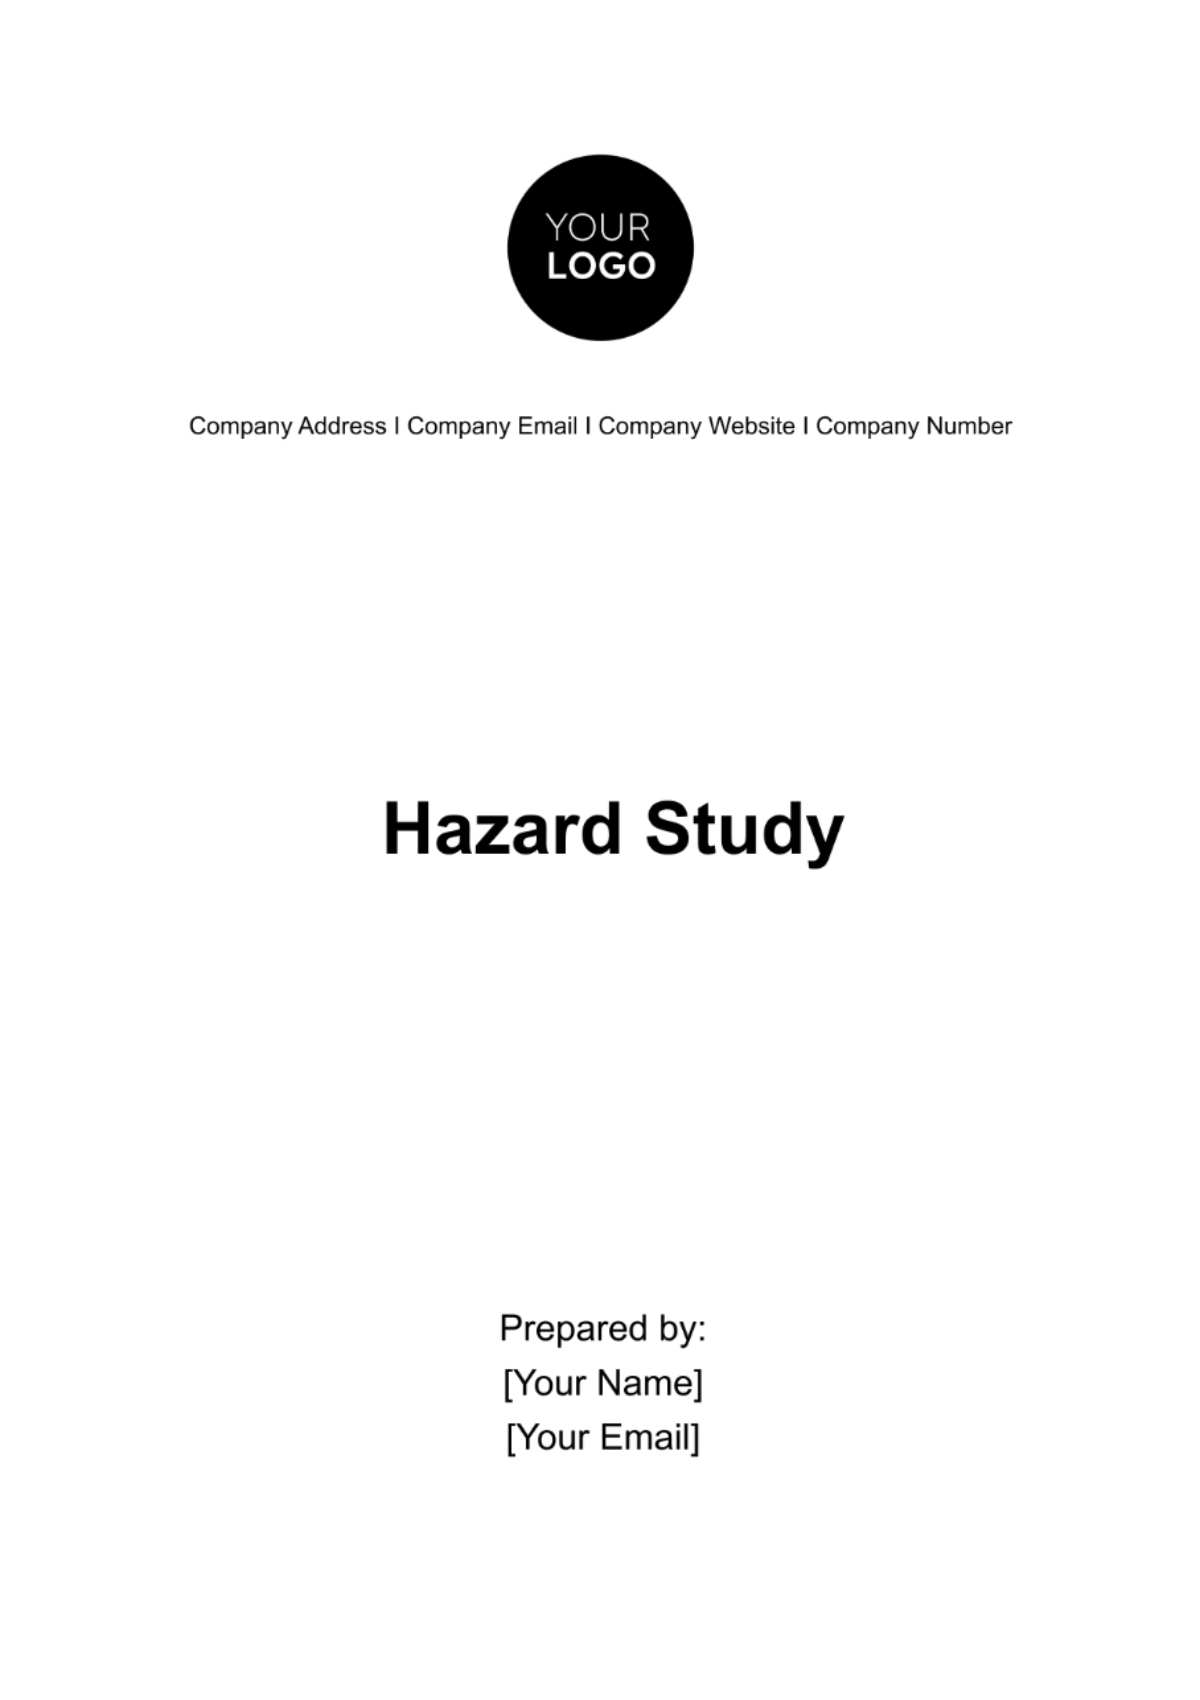 Hazard Study Template